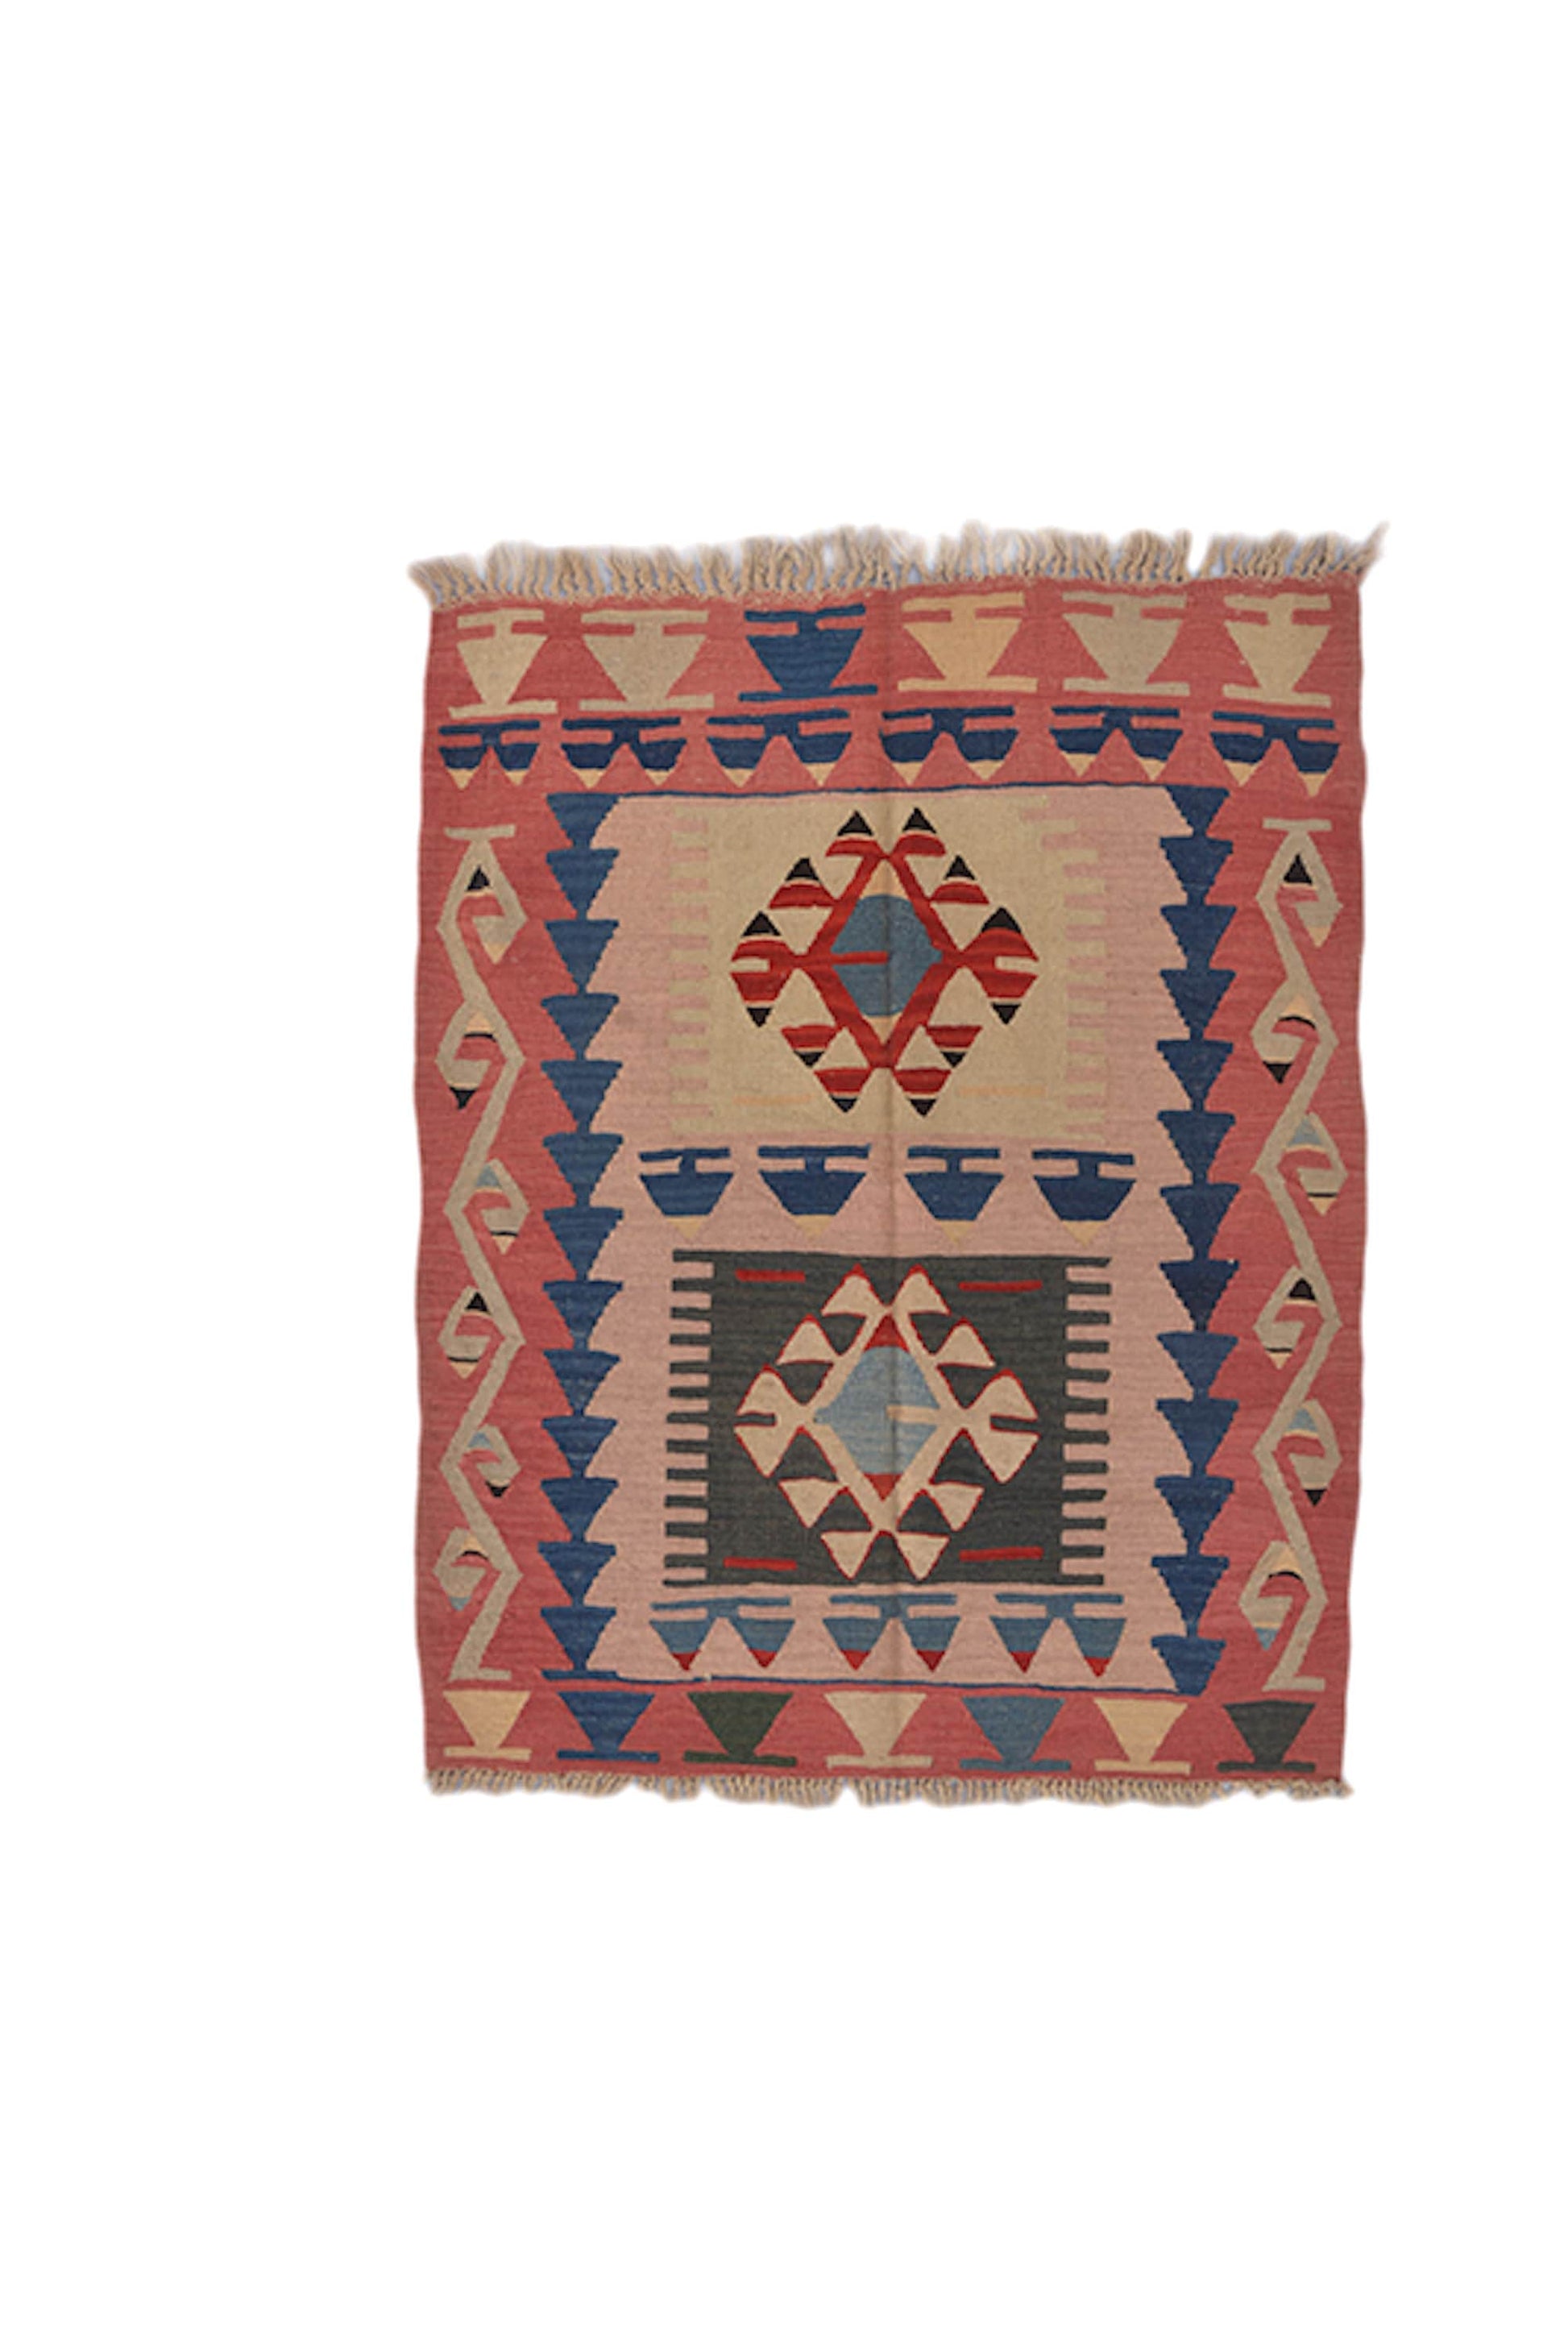 4 x 7 Colorful Kilim Ethnic Rug | Pink Hand Woven Area Rug | Flatweave tribal Bohemian style rug | Wool Traditional Vintage